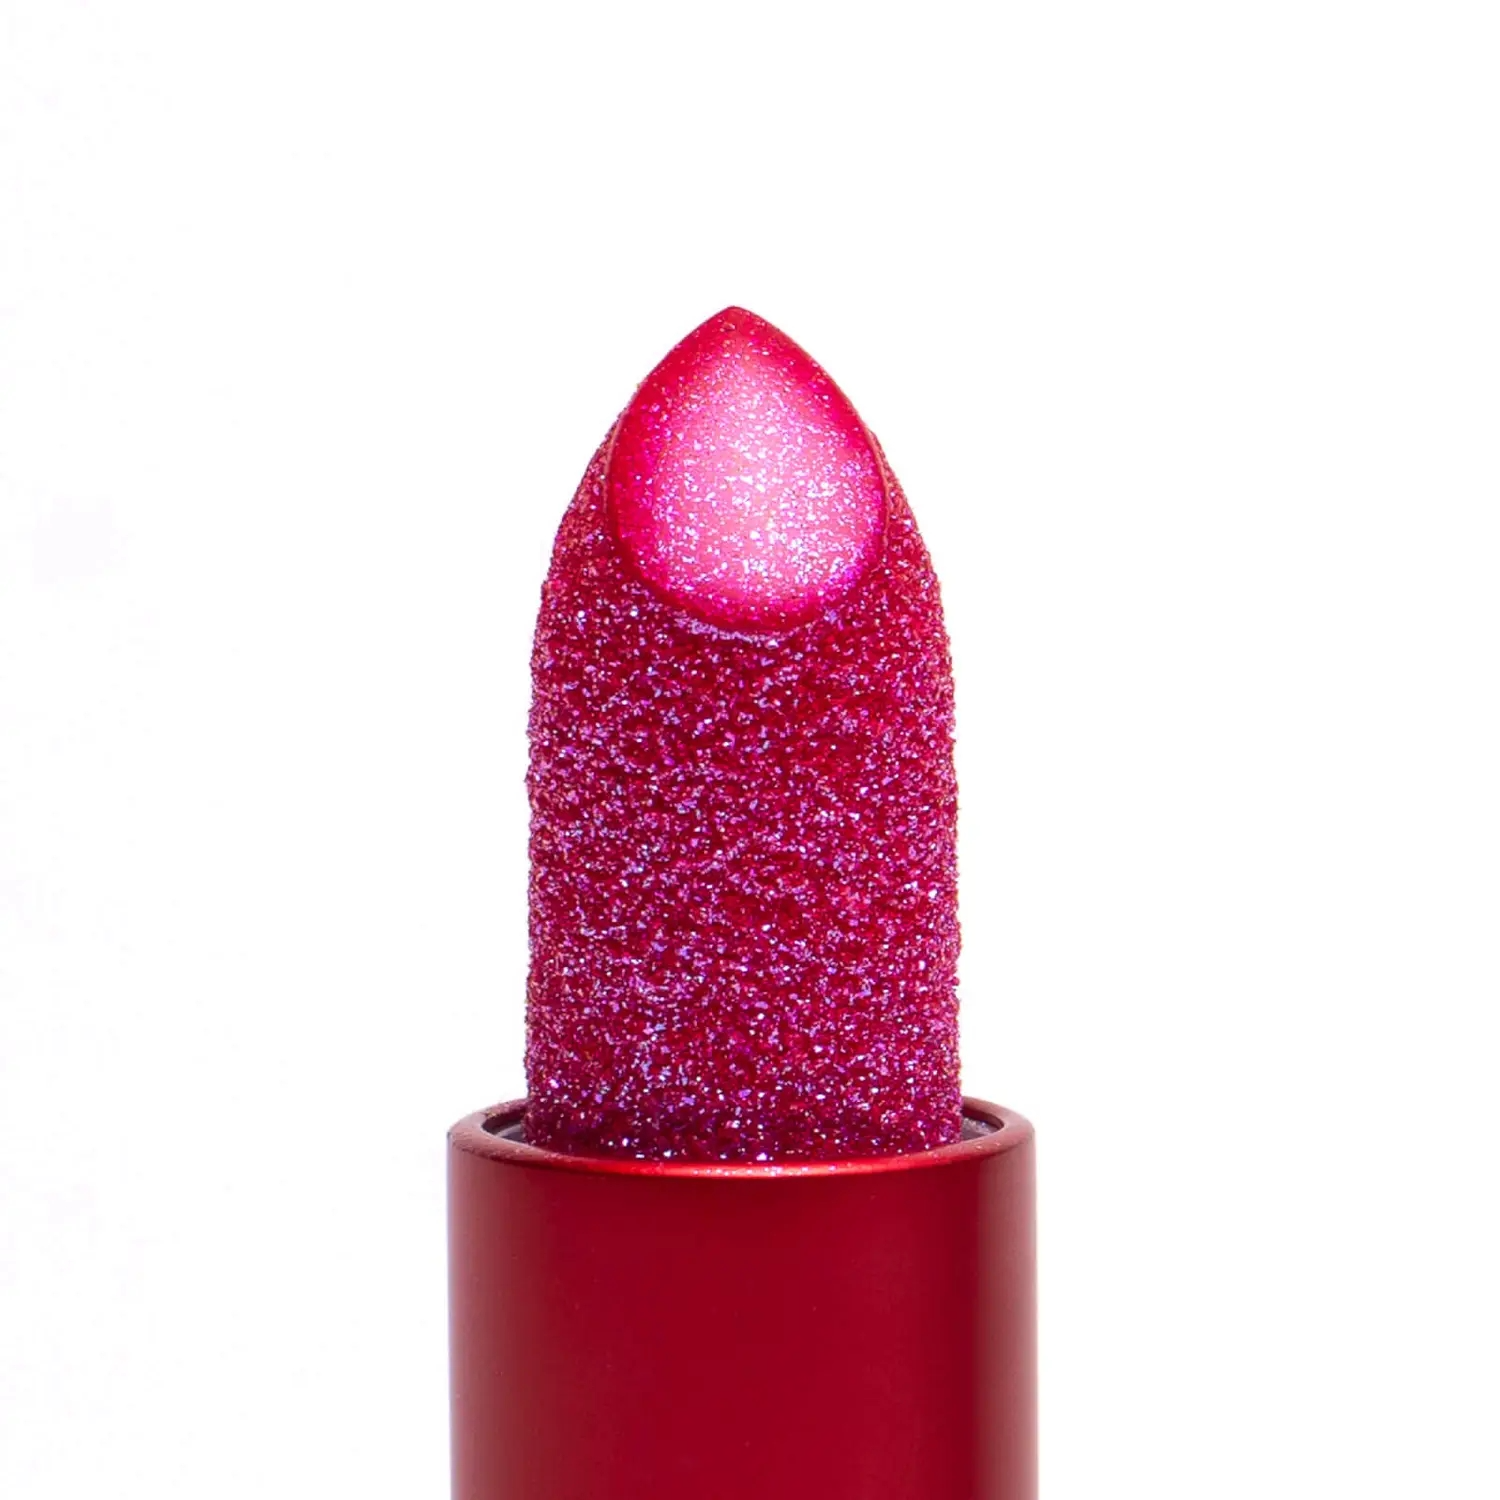 24.UOMA Beauty Black Magic Hypnotic Impact Metallic Lipstick €26.95, visit lookfantastic.ie